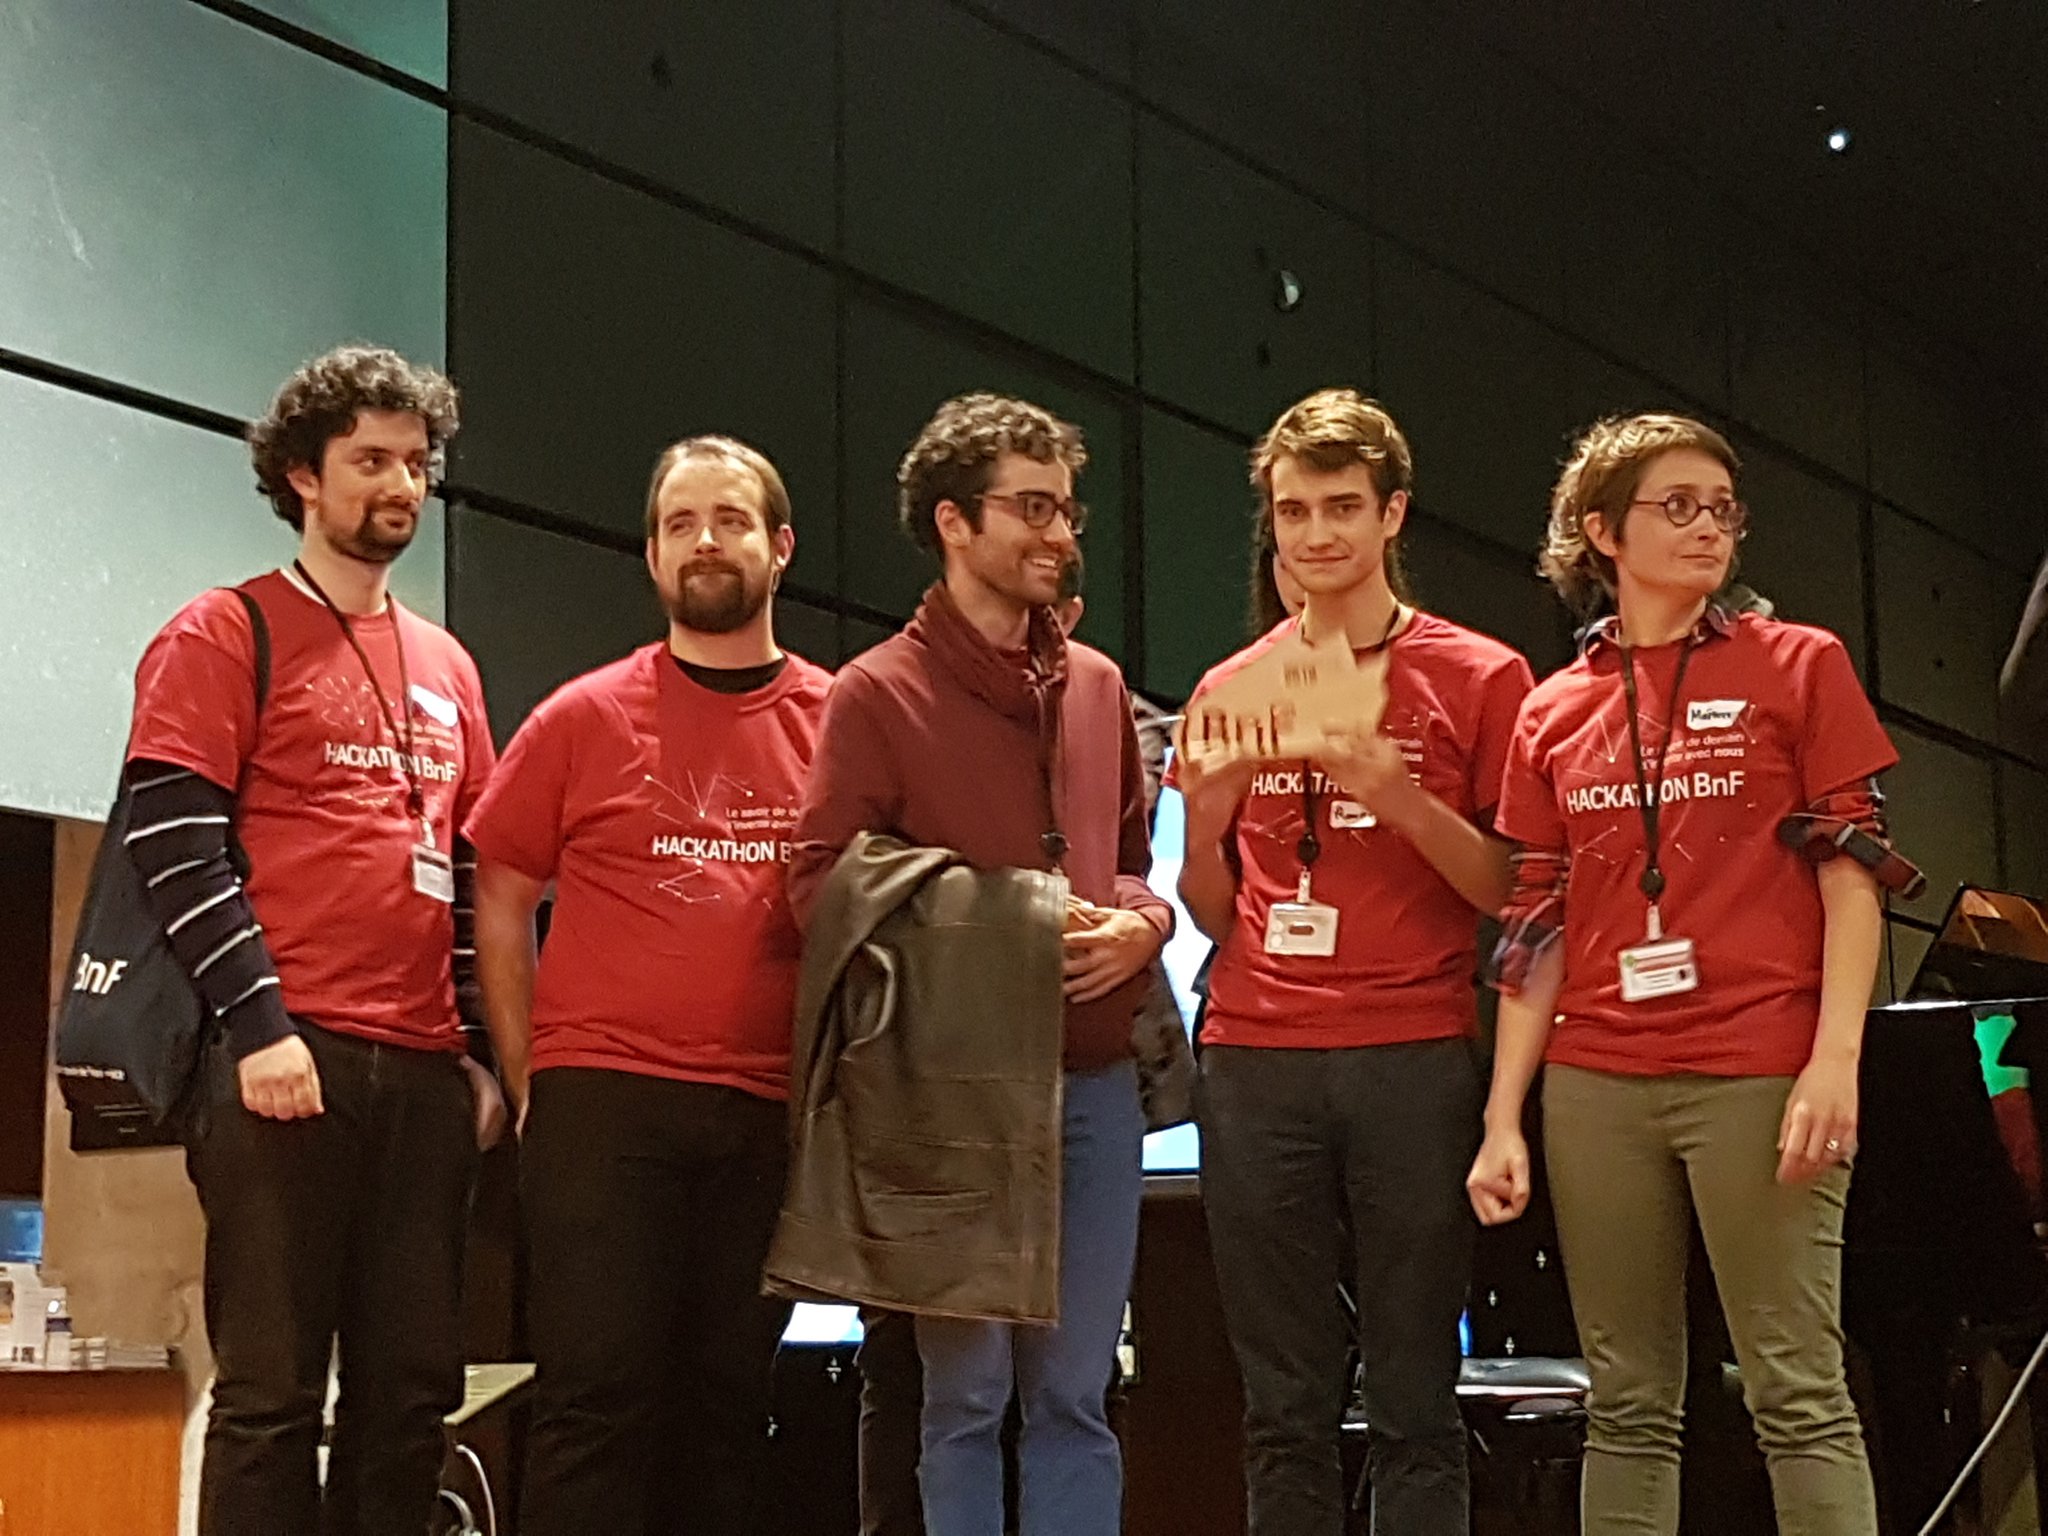 And the winner is... @gallicarte #HackathonBnF https://t.co/d2agtYHHjt